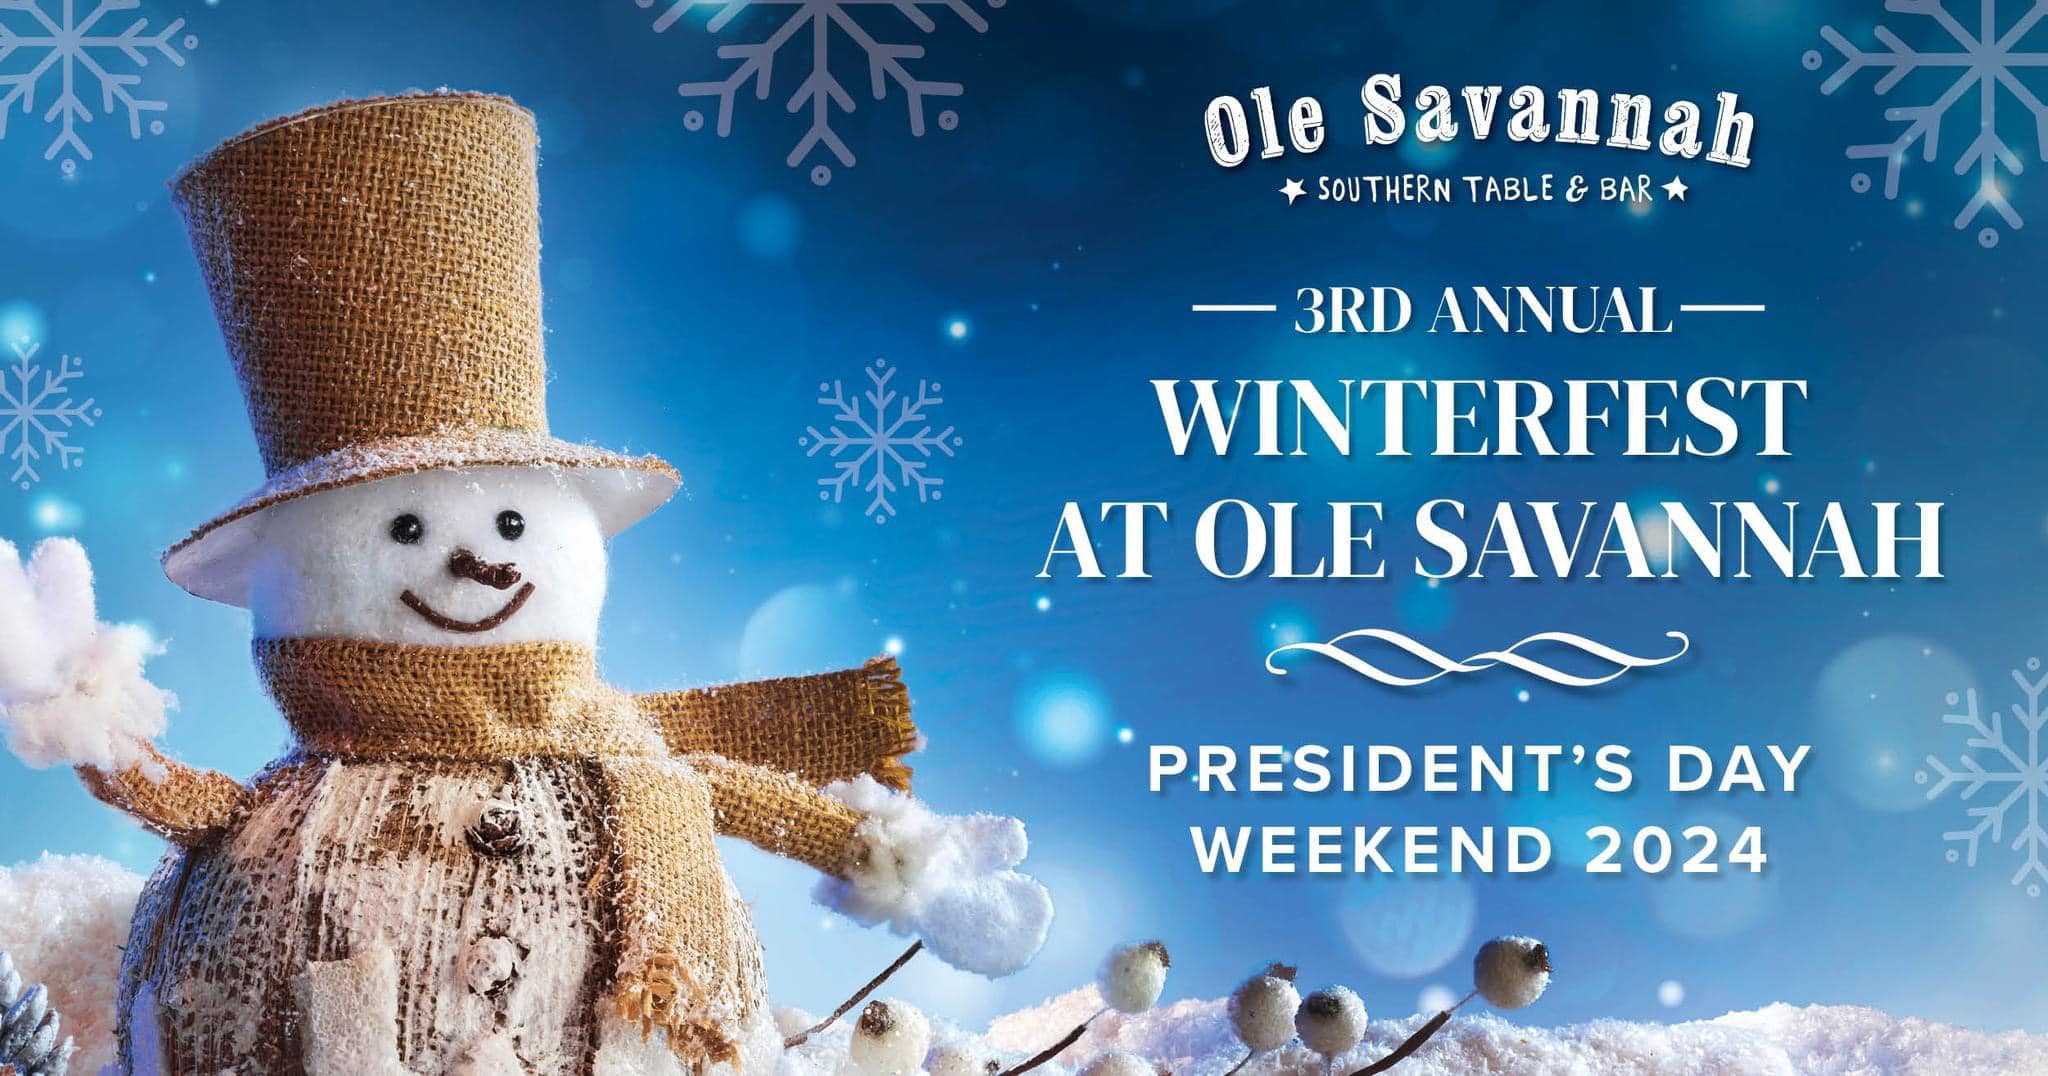 Ole Savannah’s 3rd Annual Winterfest